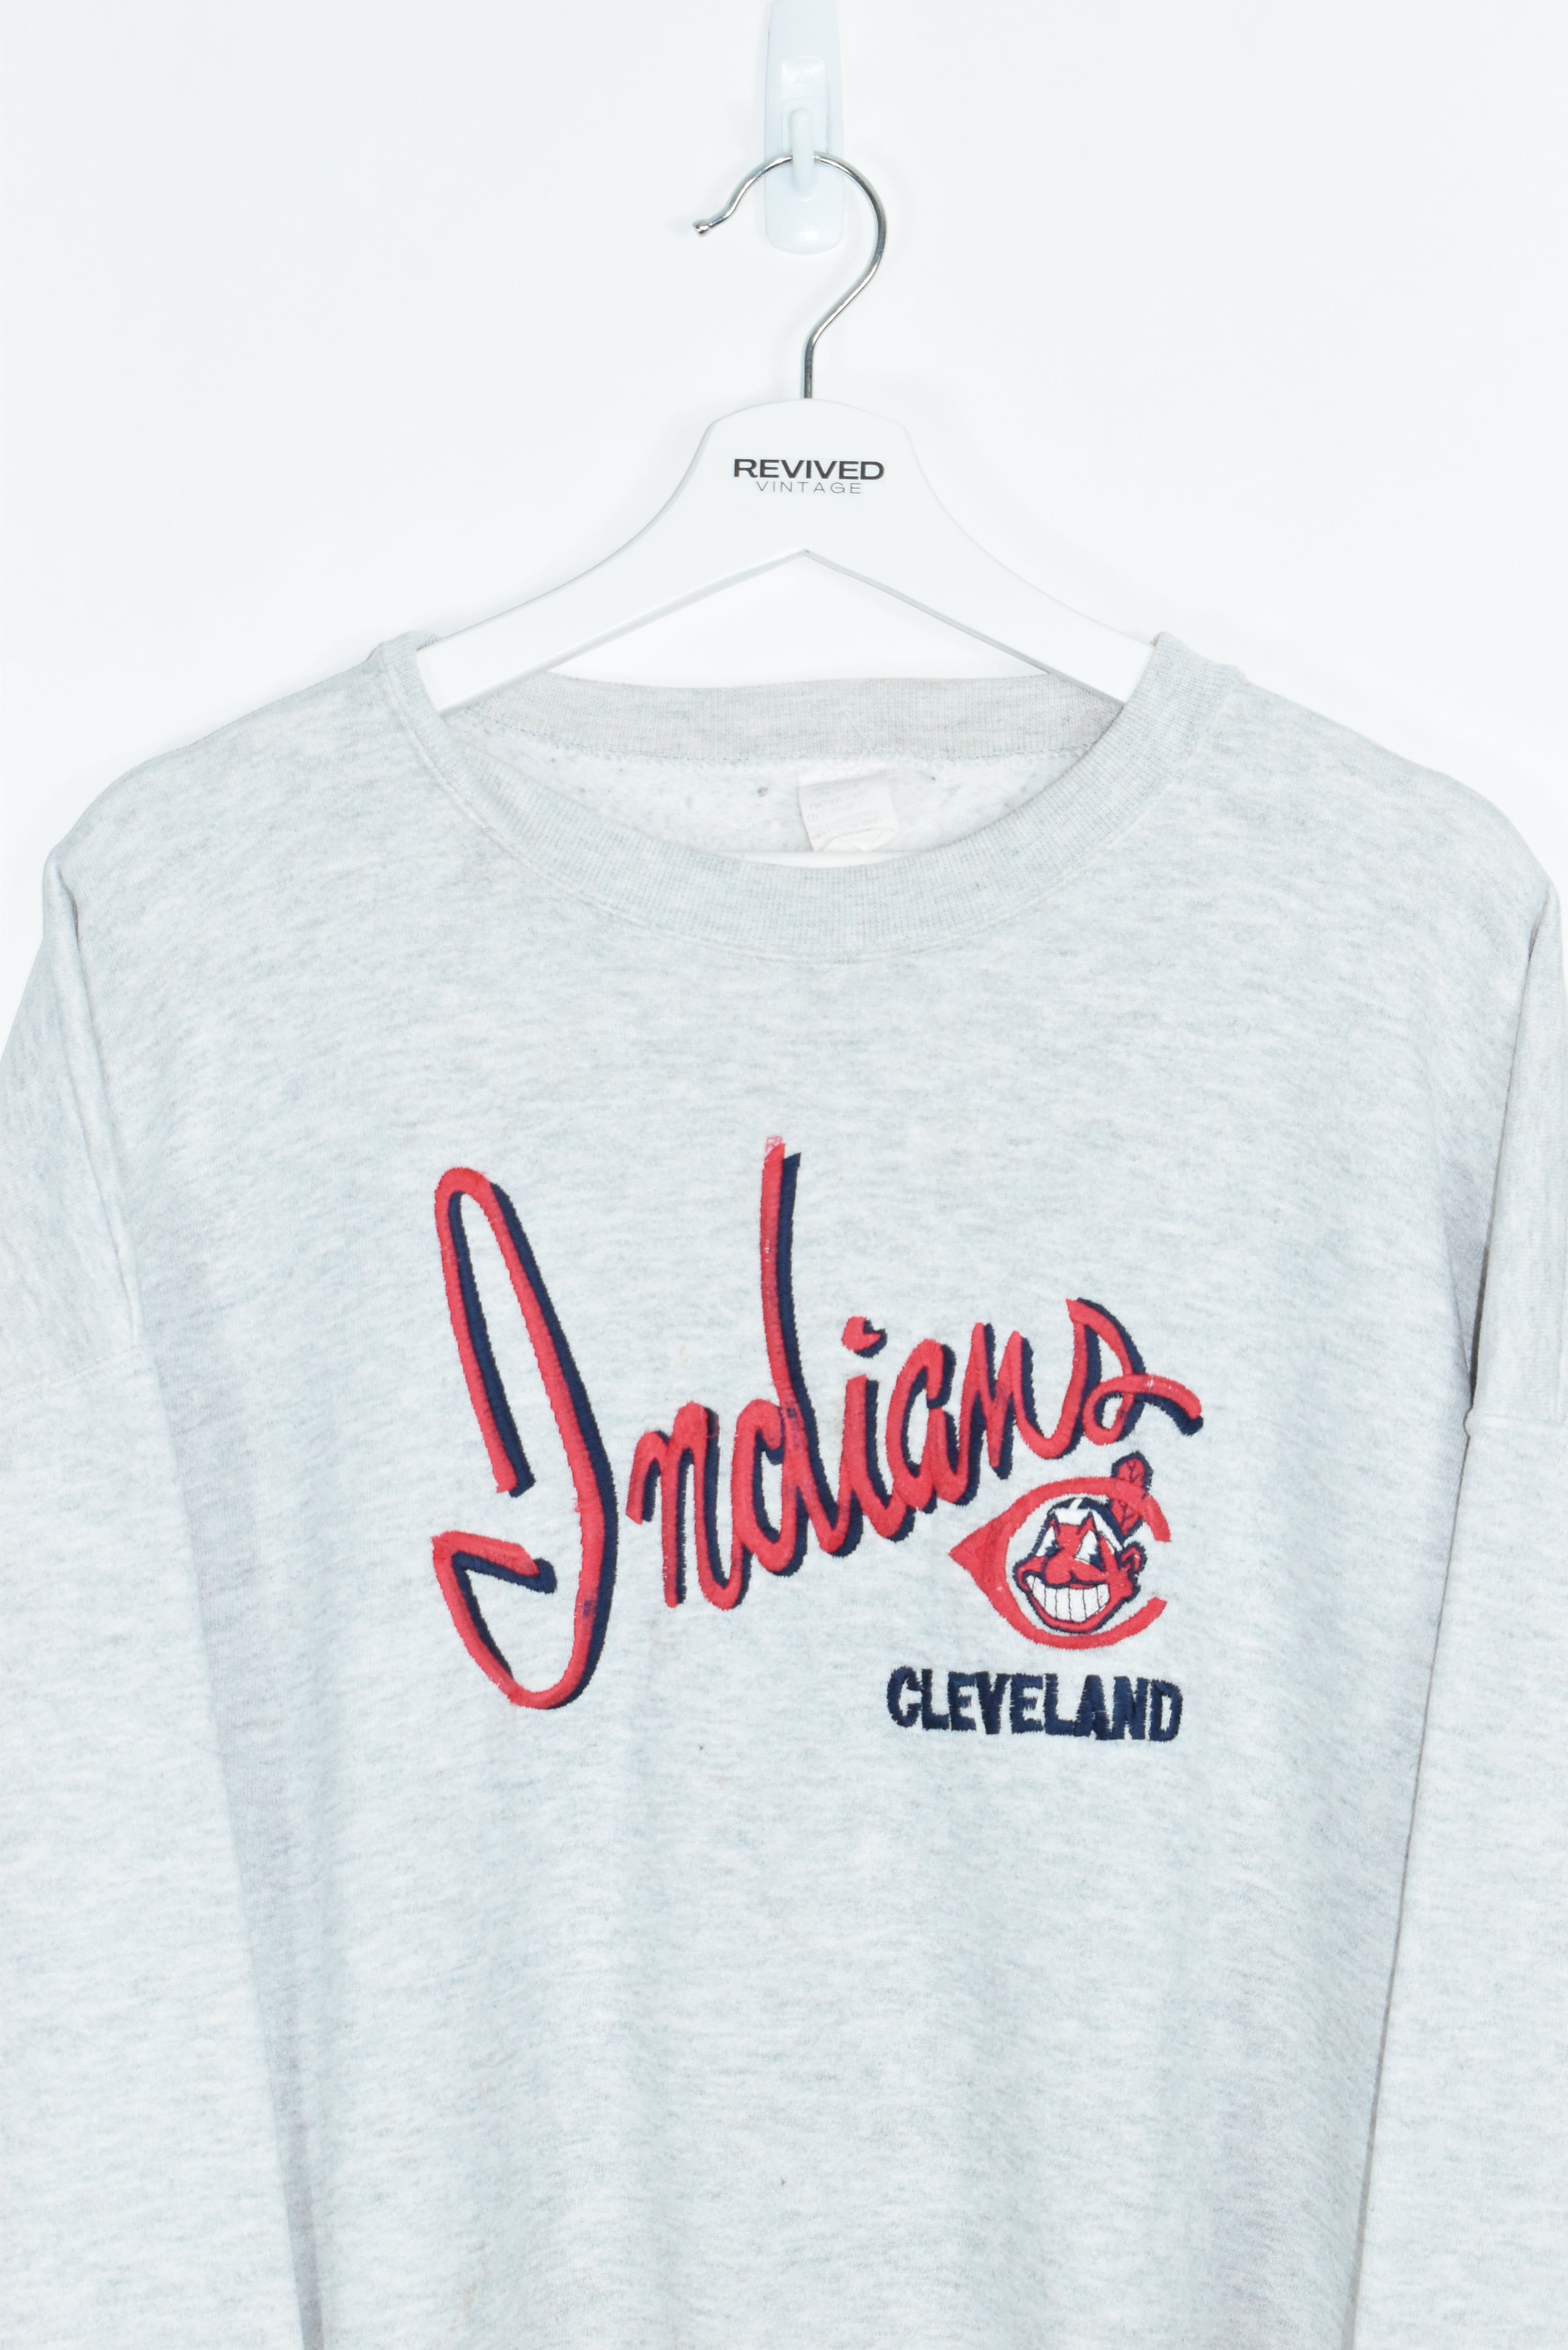 Cleveland Indians Vintage -  New Zealand